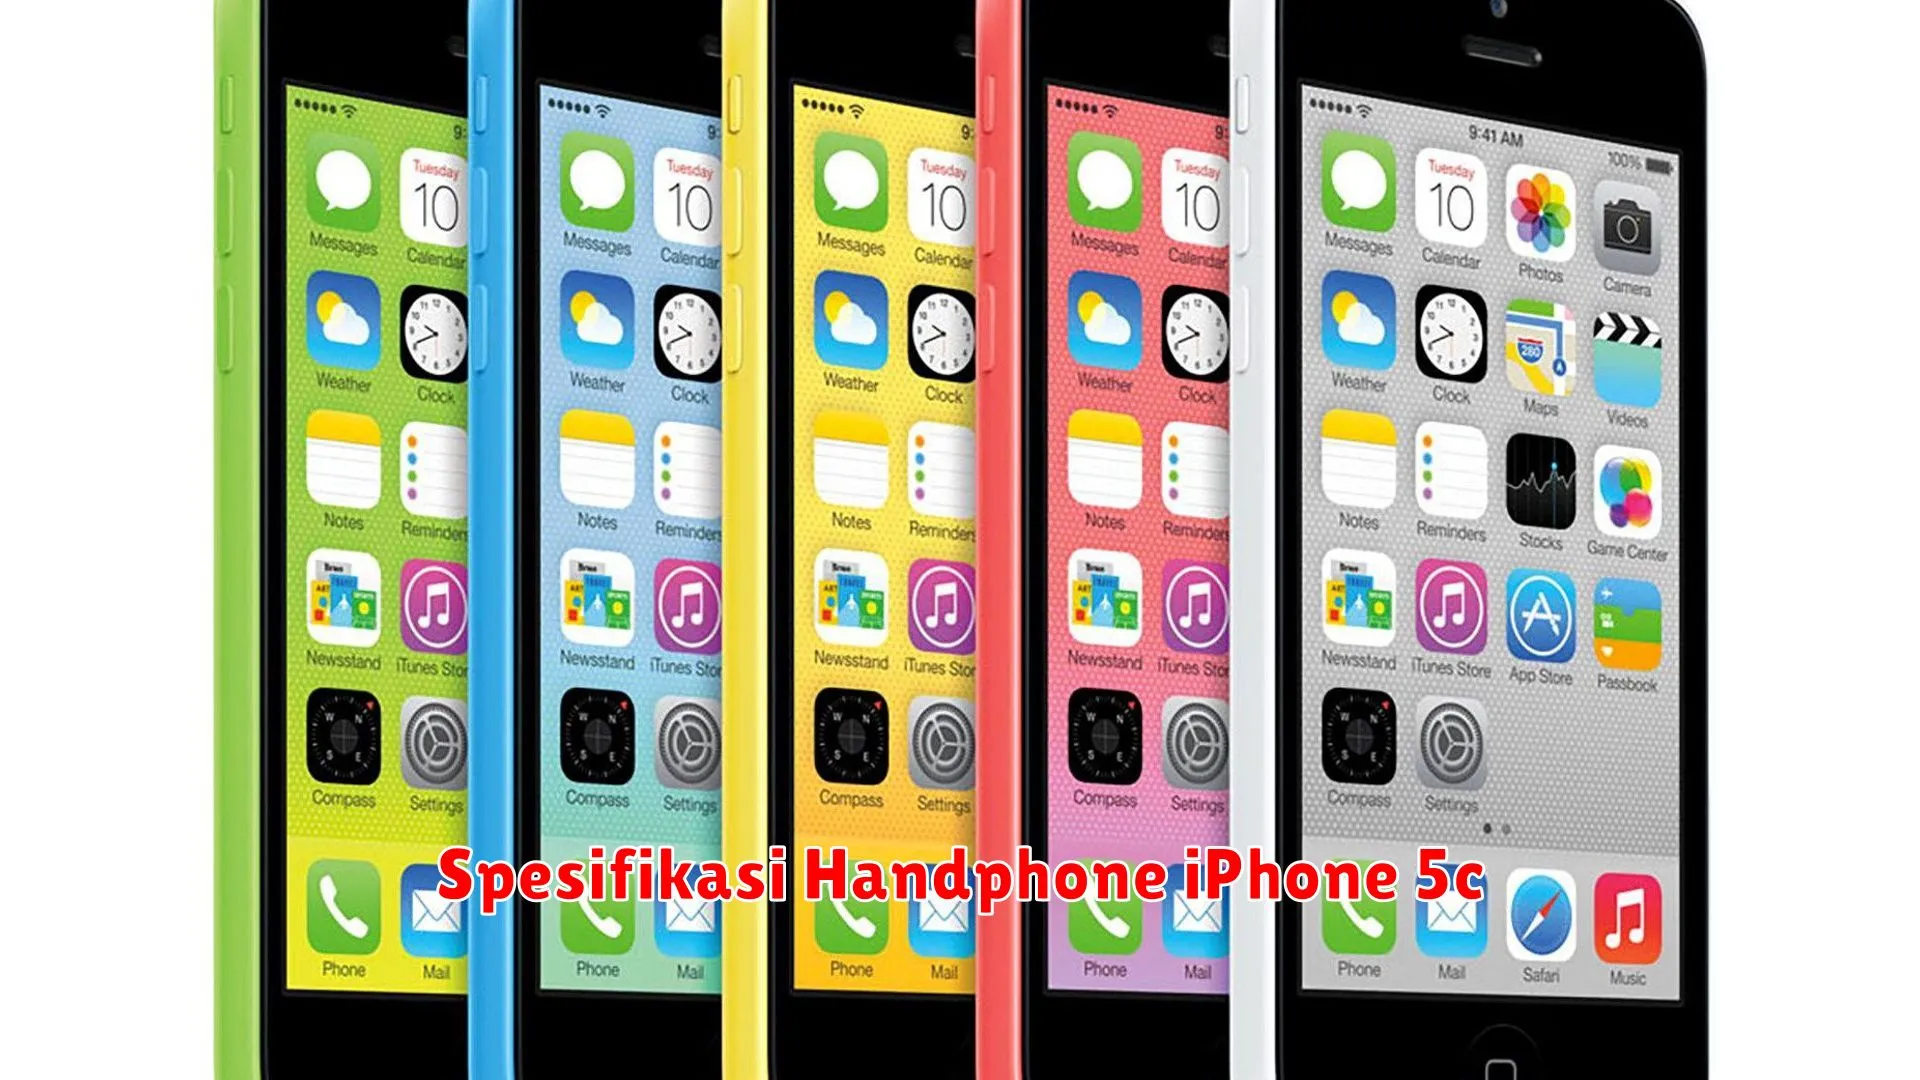 Spesifikasi Handphone iPhone 5c